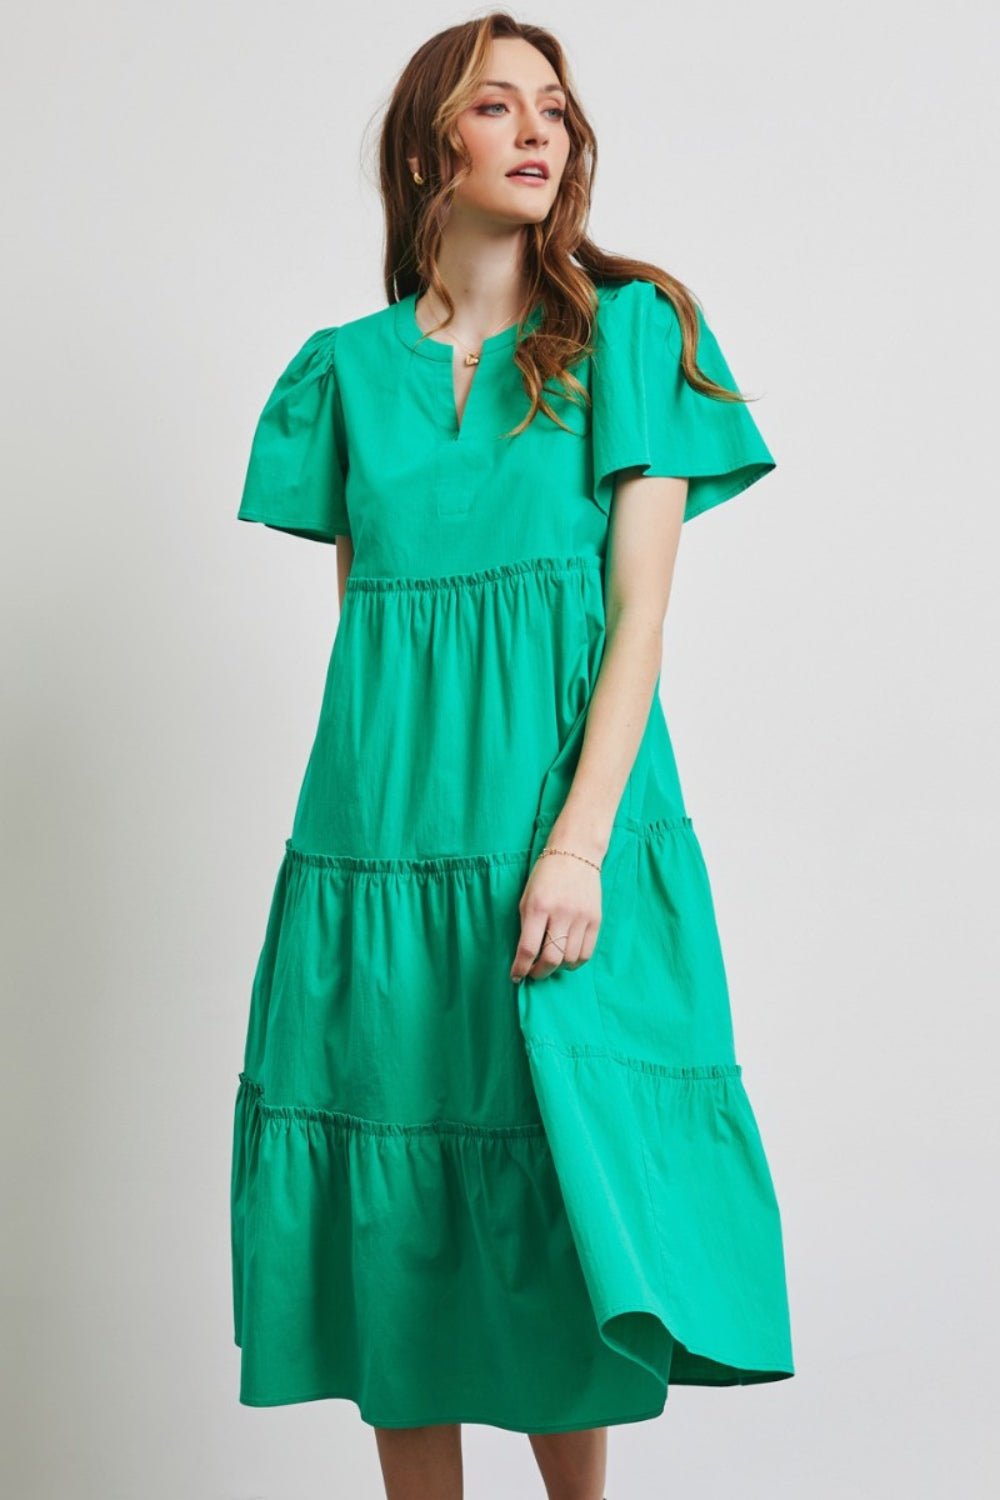 HEYSON Full Size Cotton Poplin Ruffled Tiered Midi Dress - Happily Ever Atchison Shop Co.